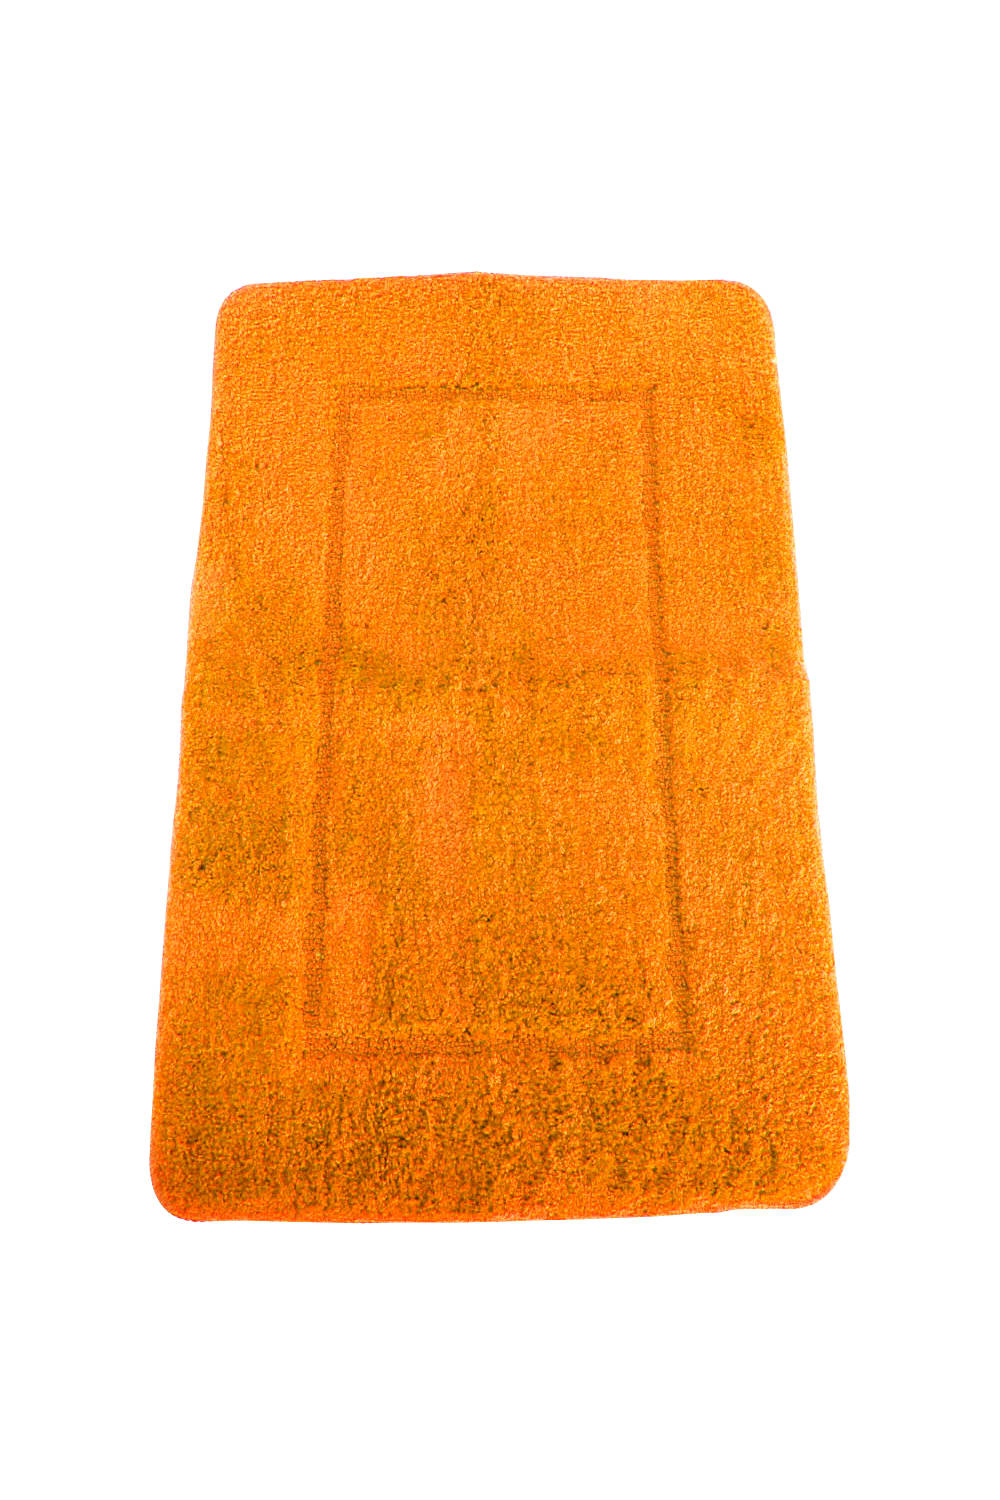 Mayfair Cashmere Touch Ultimate Microfiber Bath Mat (Orange) (19.6 x 31.4in)